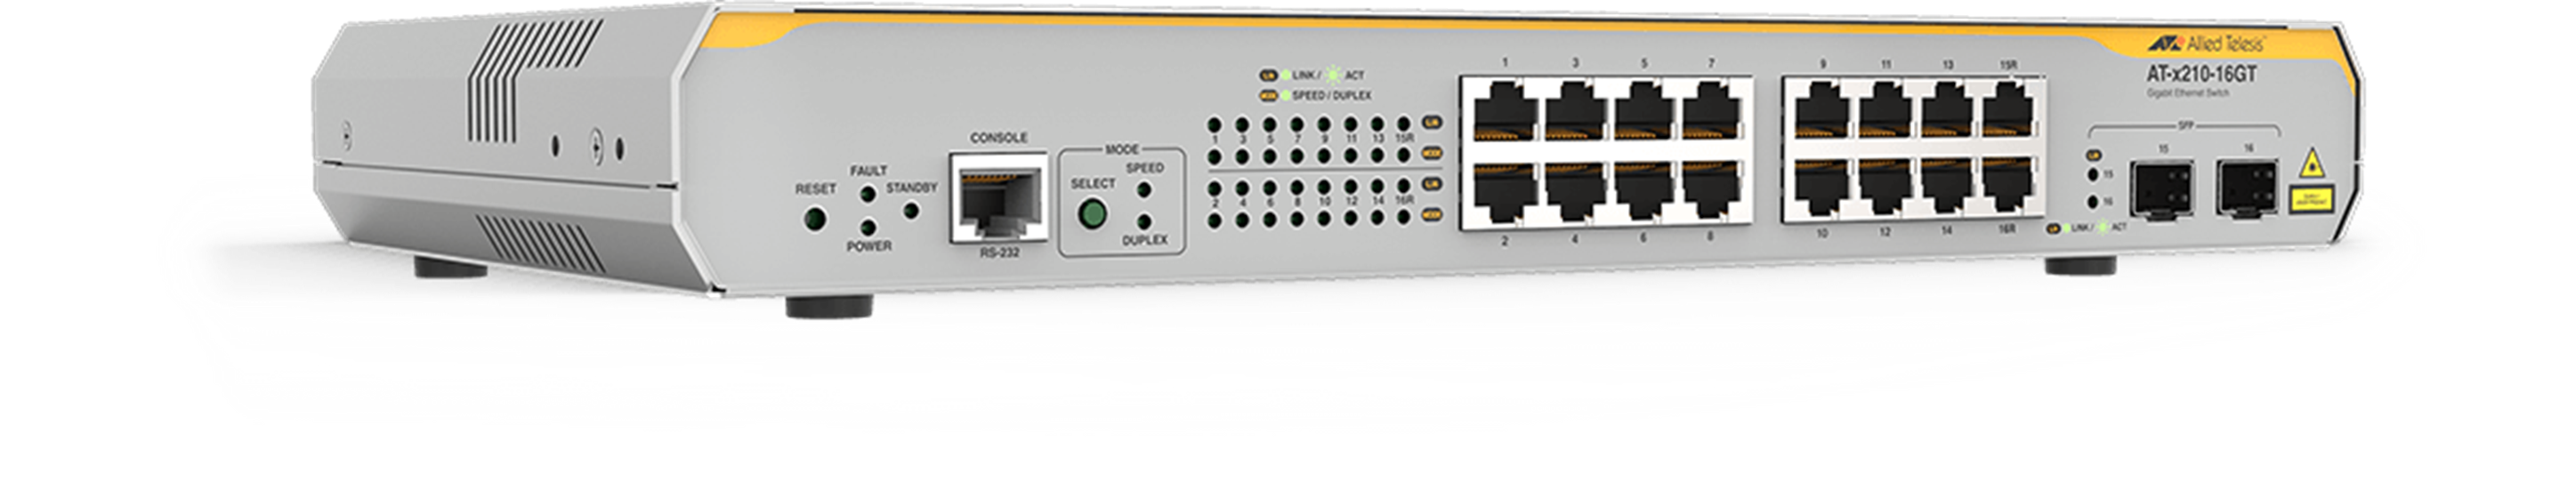 AT-X210 Series - Layer 2 Gigabit Switch (EoS)